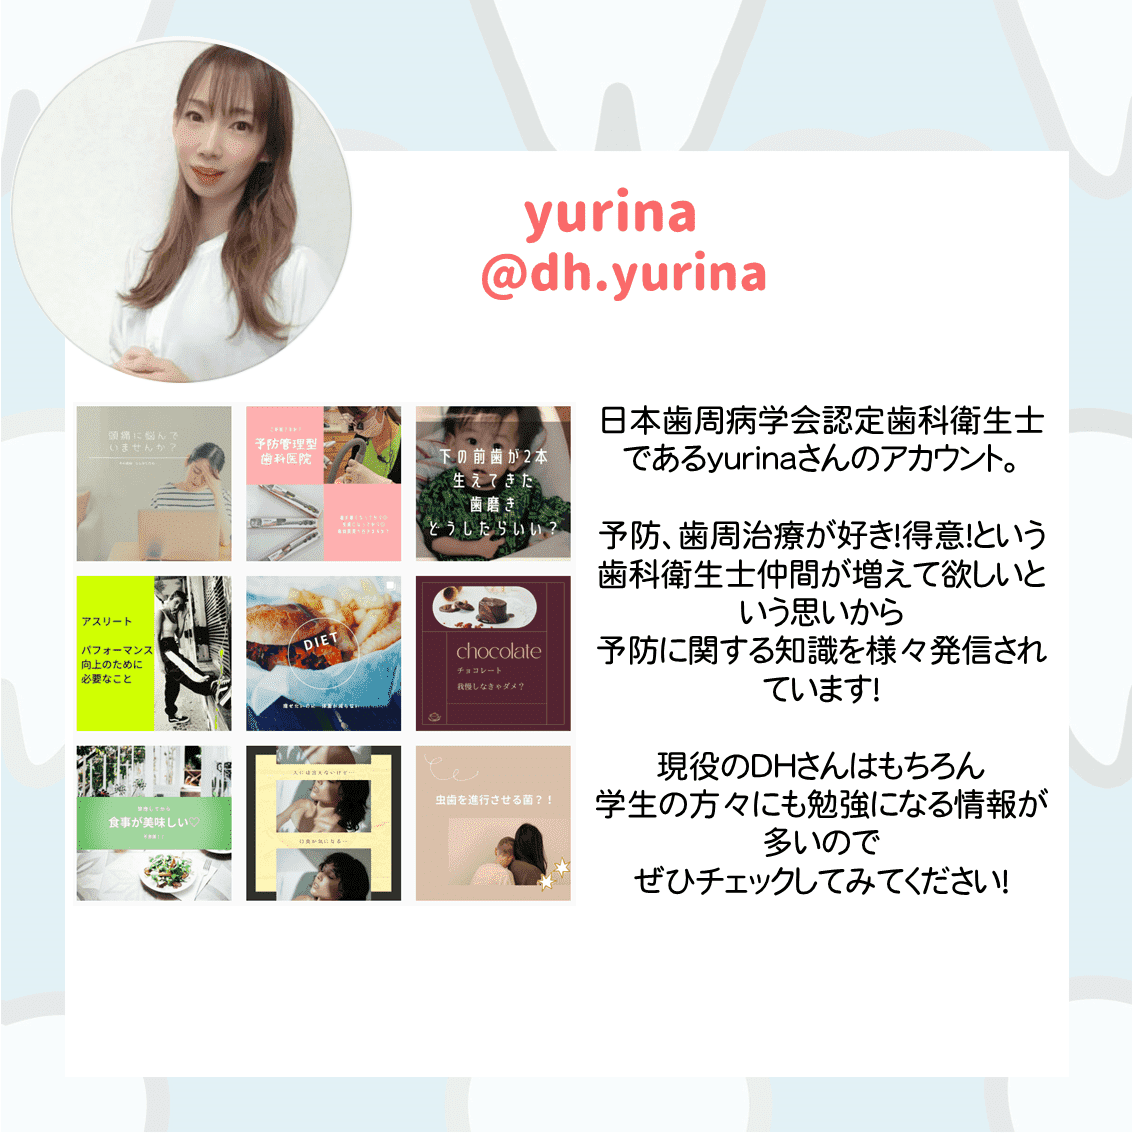 yurina